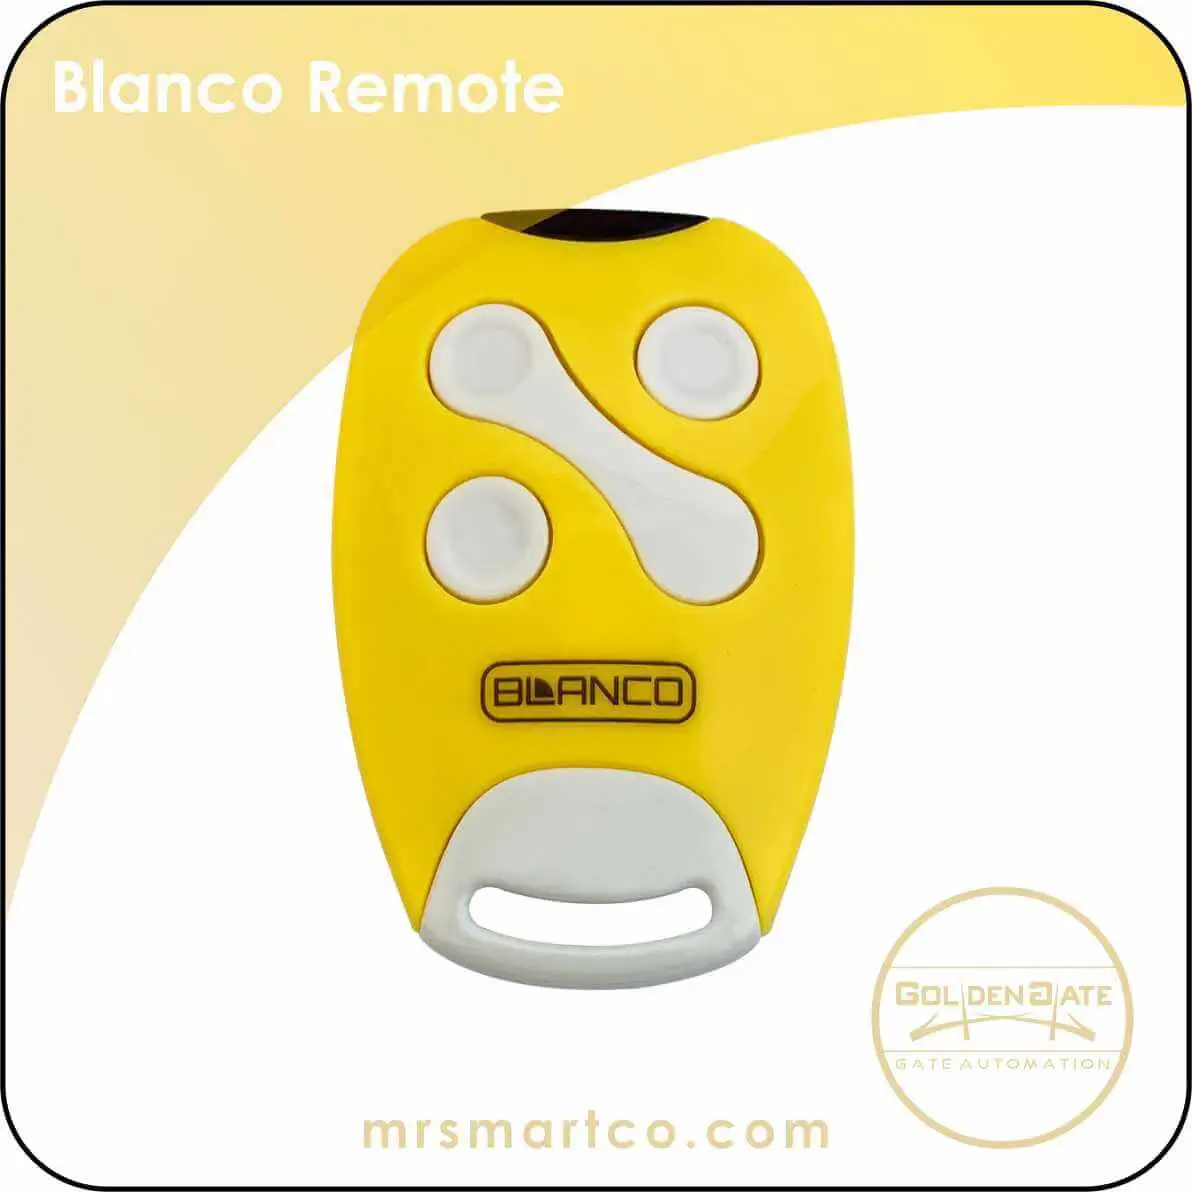 Blanco Remote